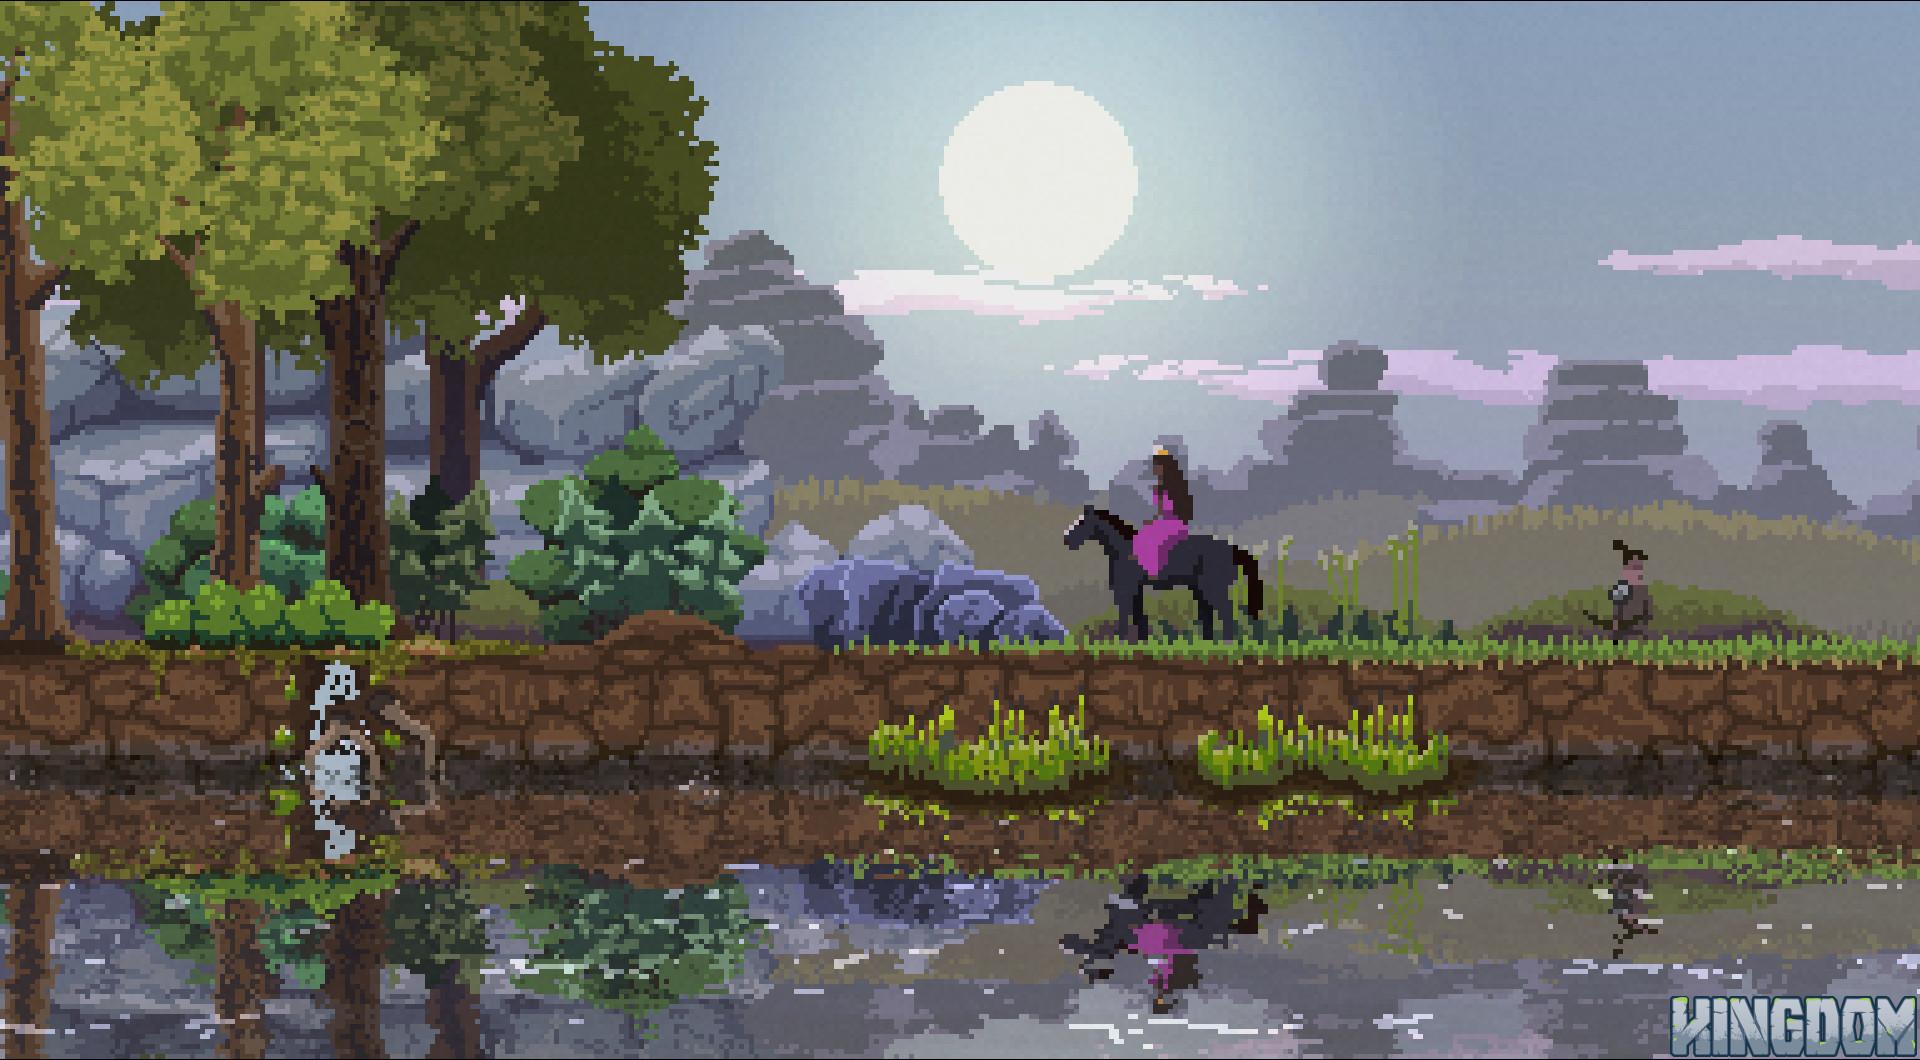 Screenshot №6 from game Kingdom: Classic